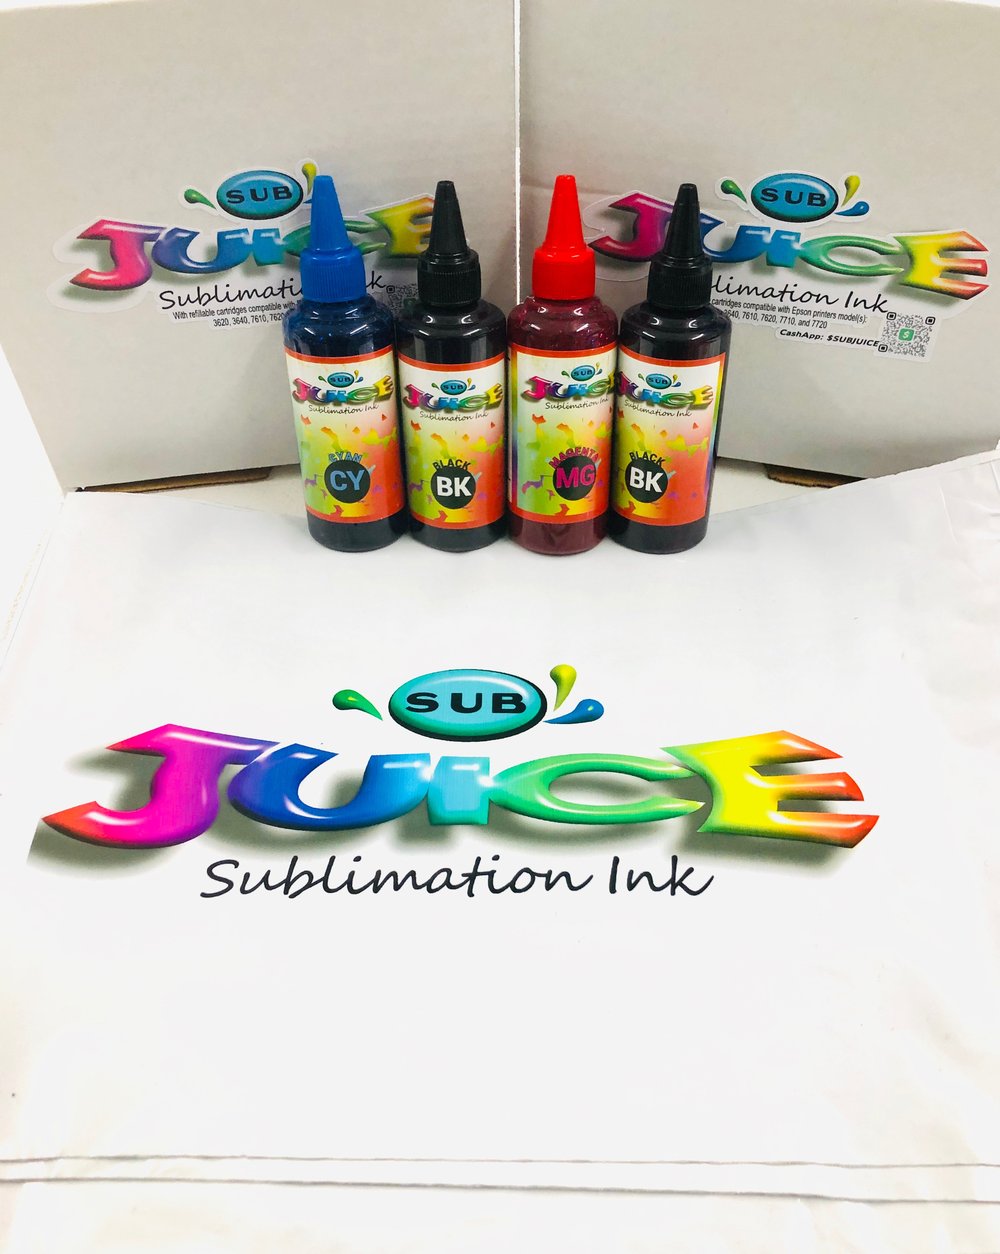 SubJuice Ink Complete Conversion Sublimation Kit